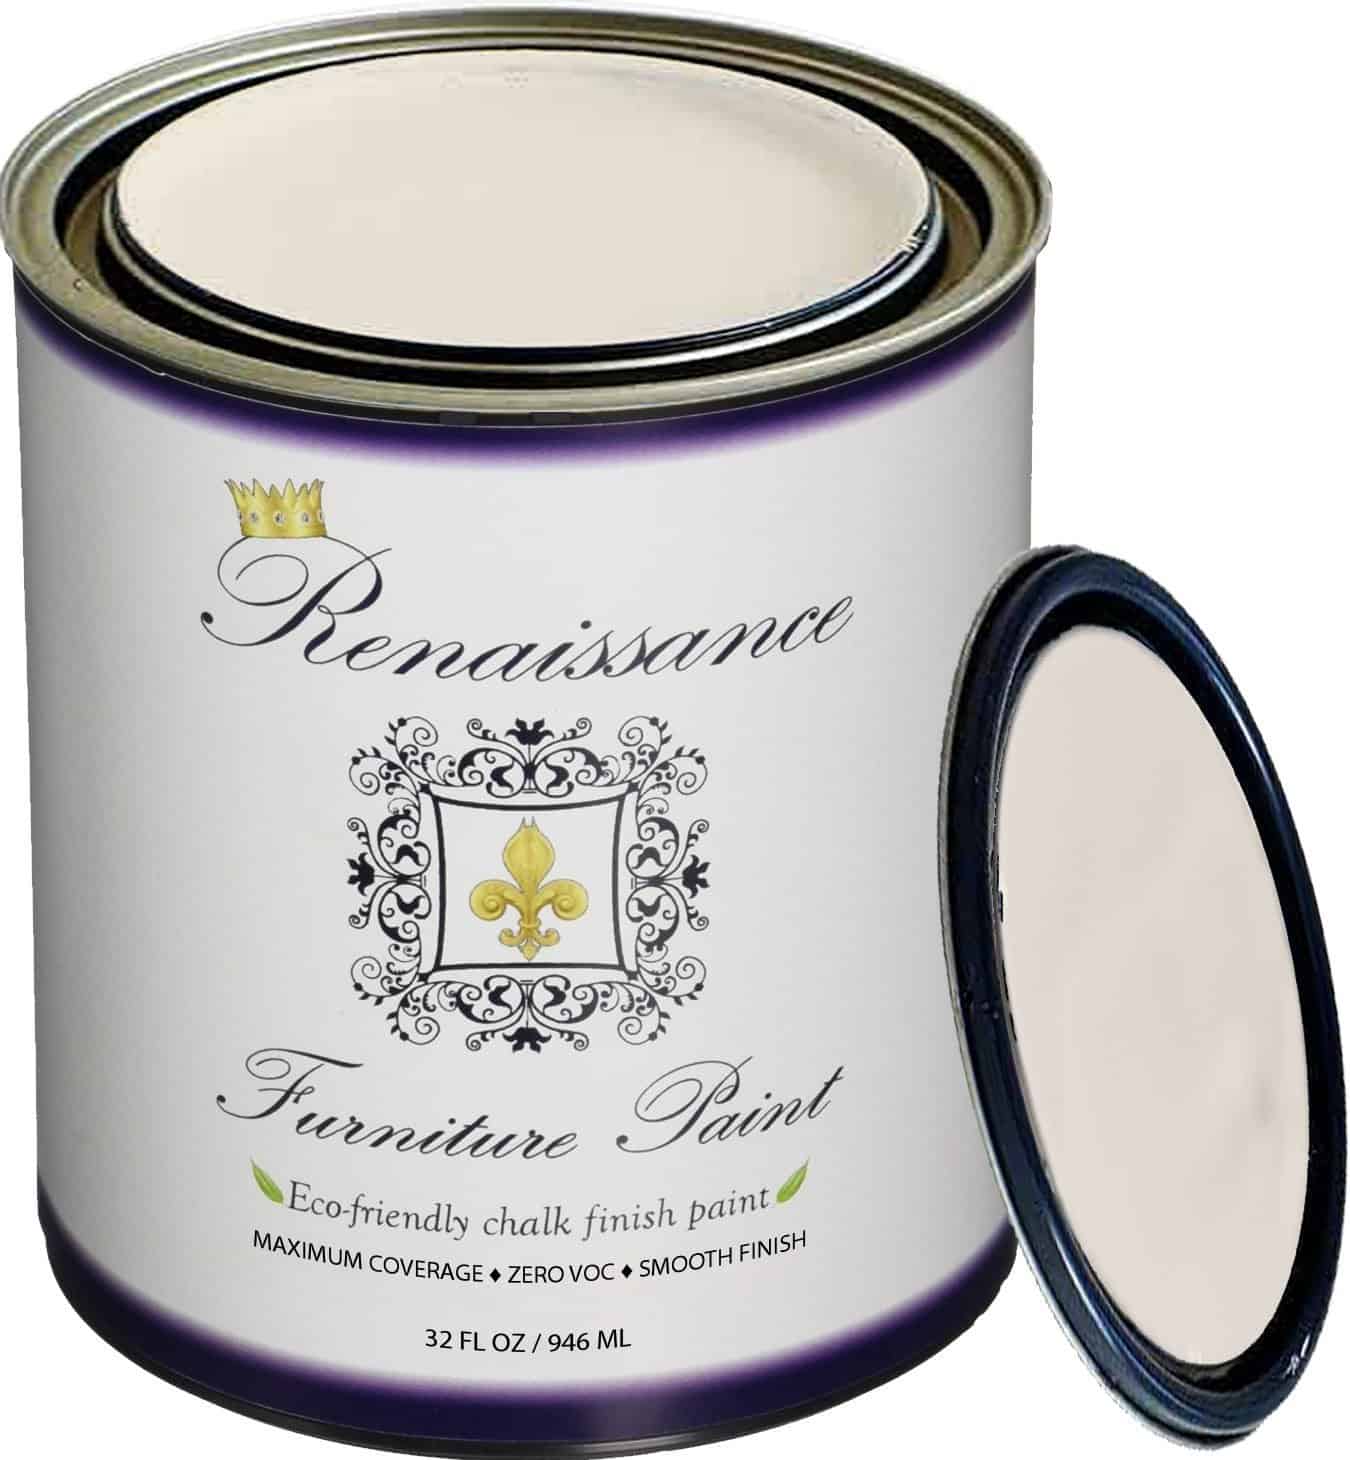 Renaissance Chalk Finish Paint - Chalk Furniture & Cabinet Paint - Non Toxic, Eco-Friendly, Superior Coverage - Ivory Tower (32oz)